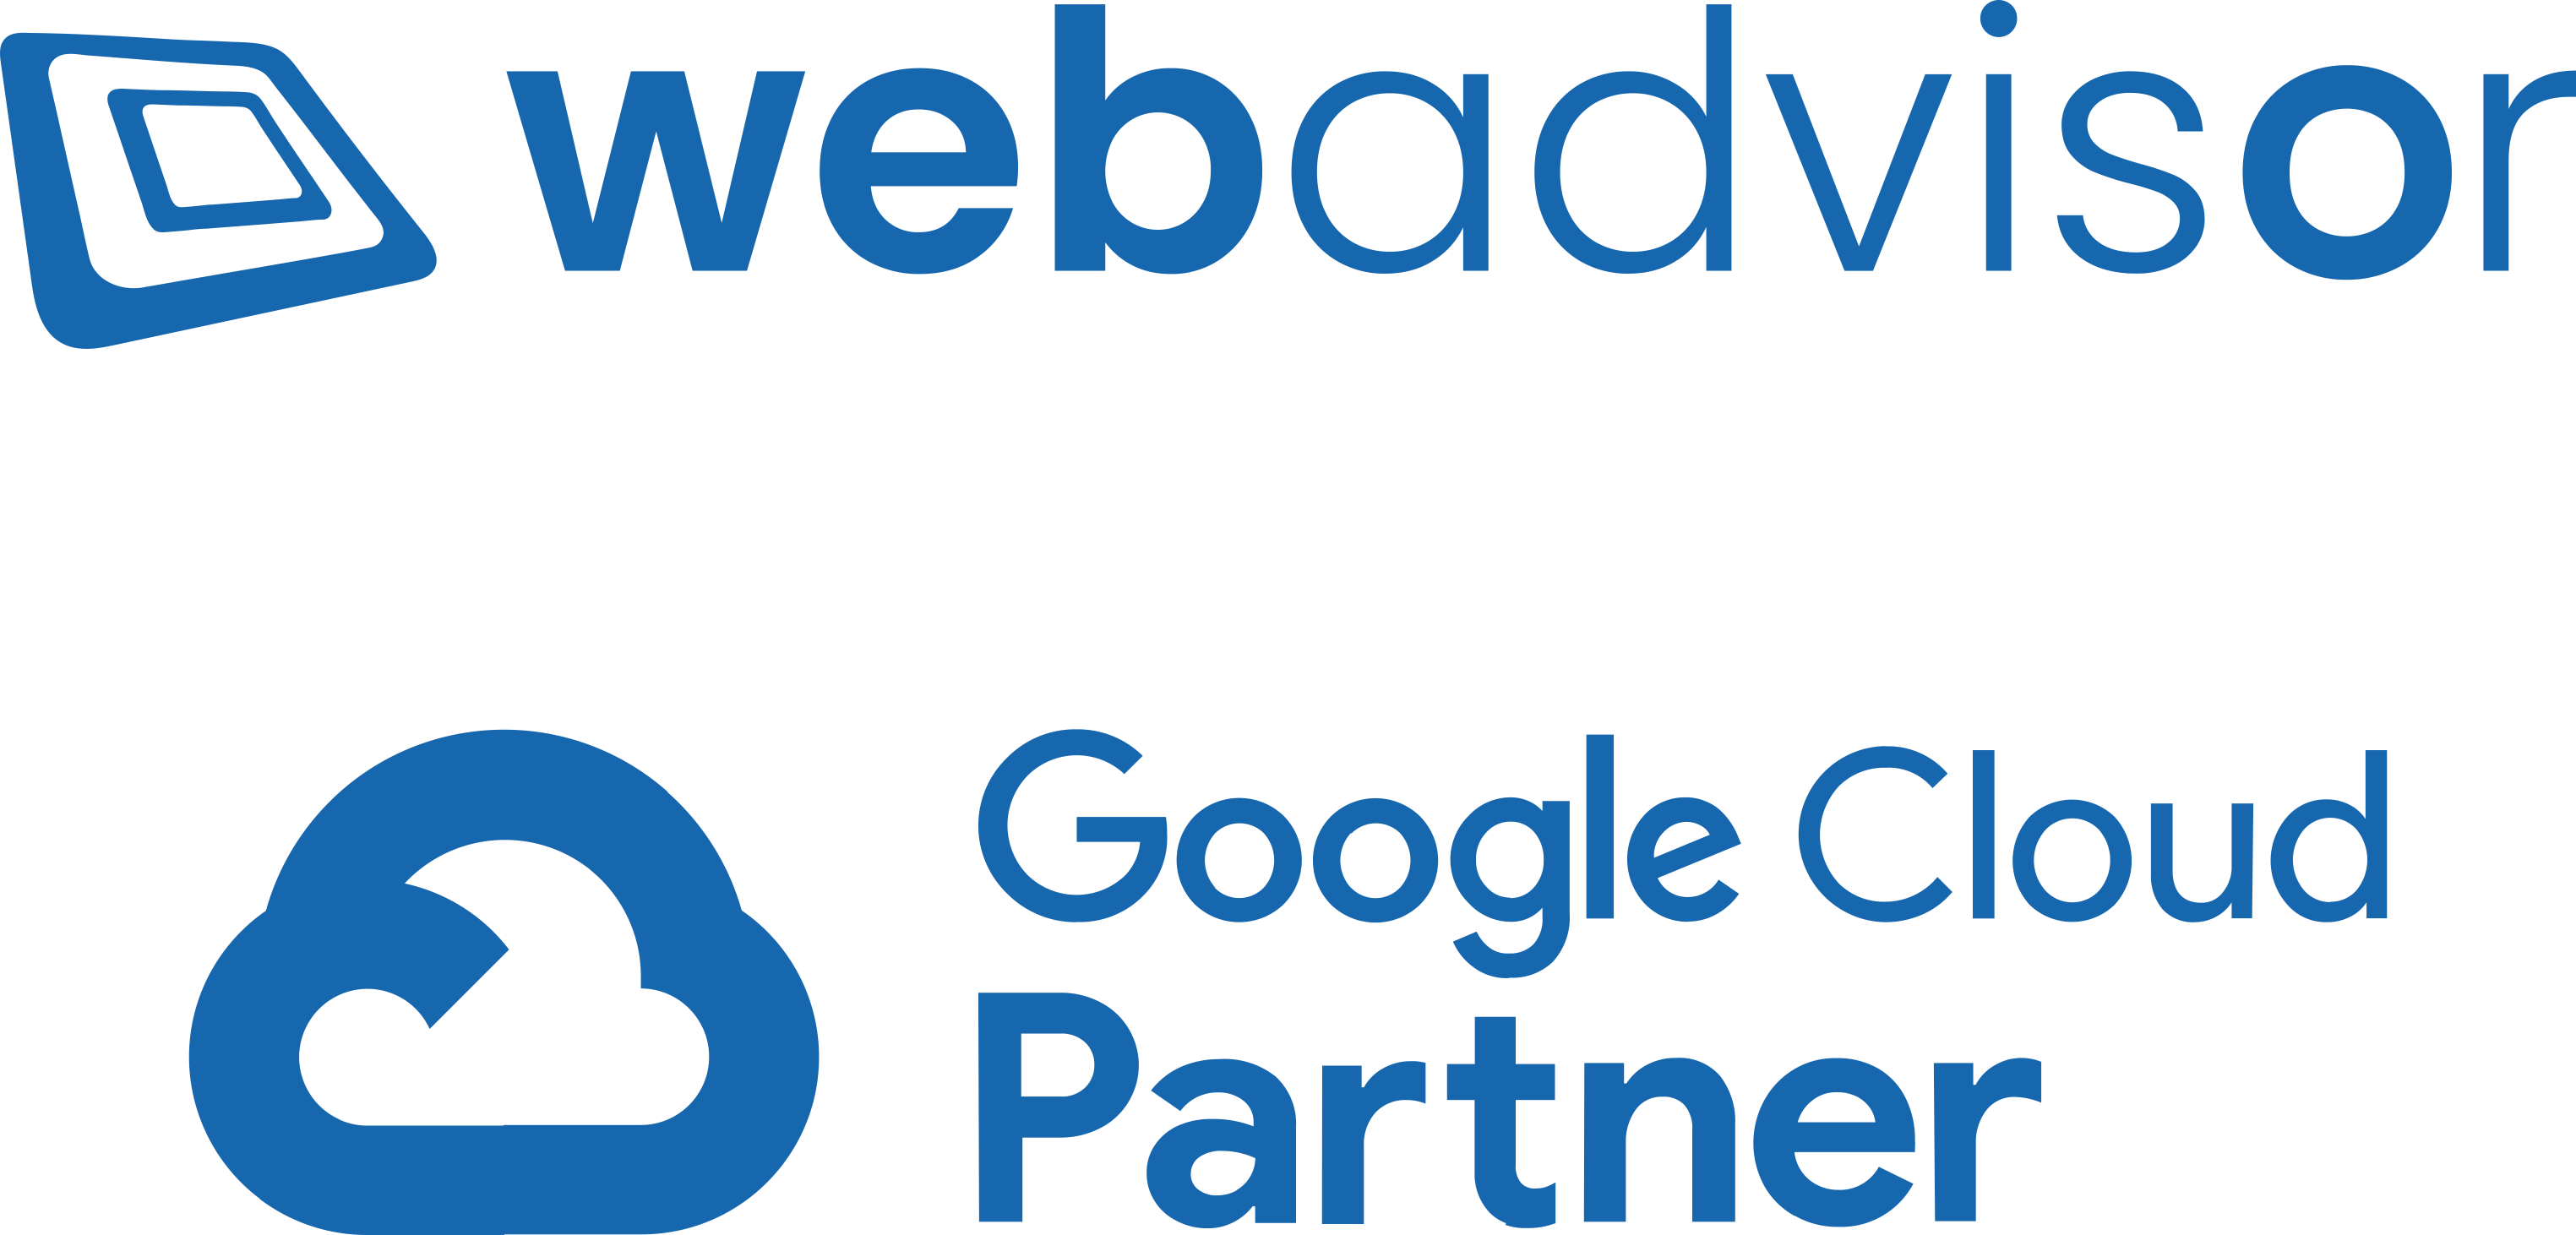 Web Advisor & Google Cloud Partner